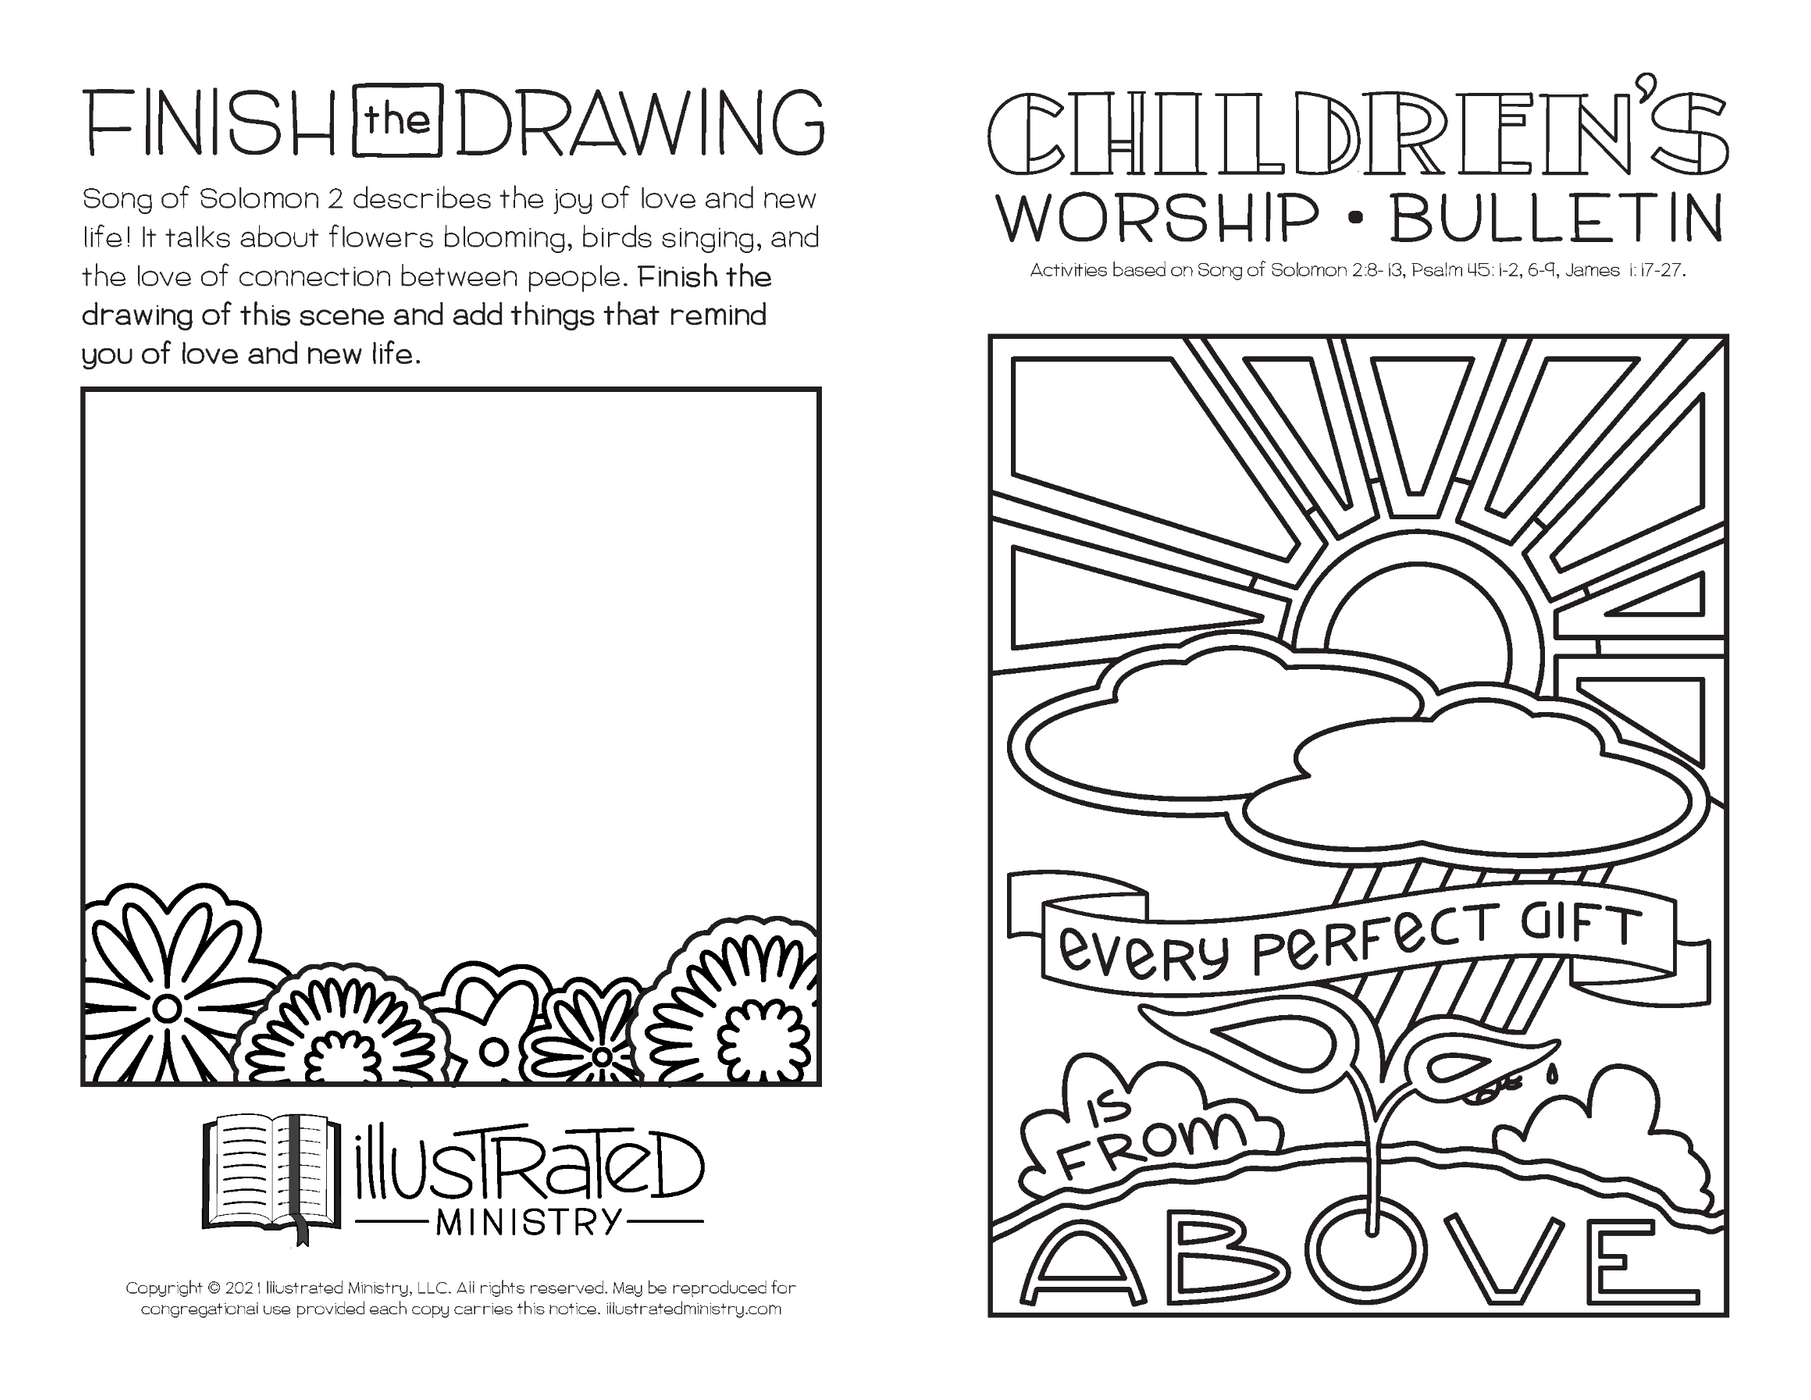 illustrated-worship-children-s-bulletins-summer-2021-illustrated-ministry